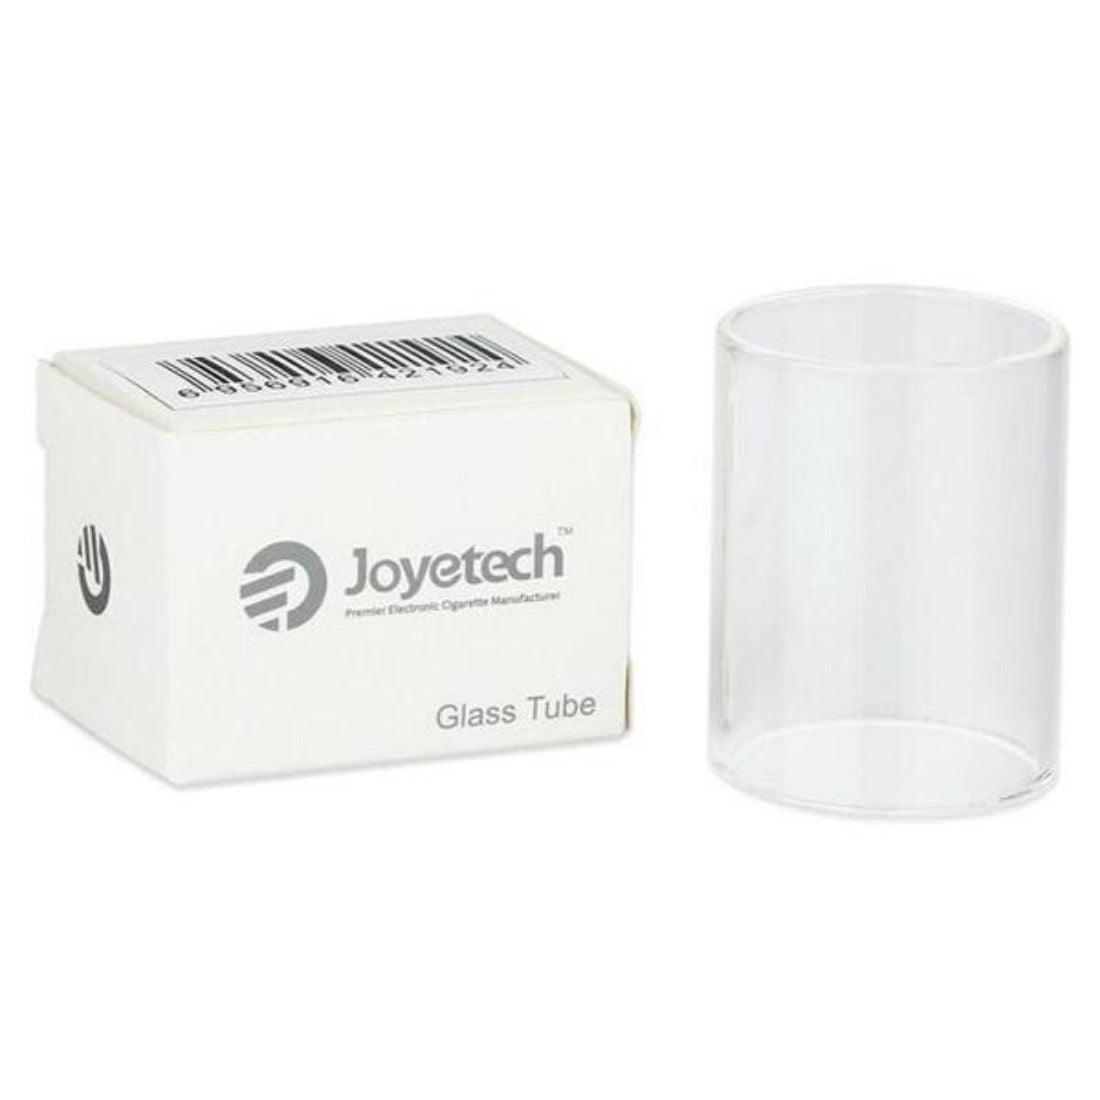 Joyetech Exceed D19 Glass Tube - Vaper Aid